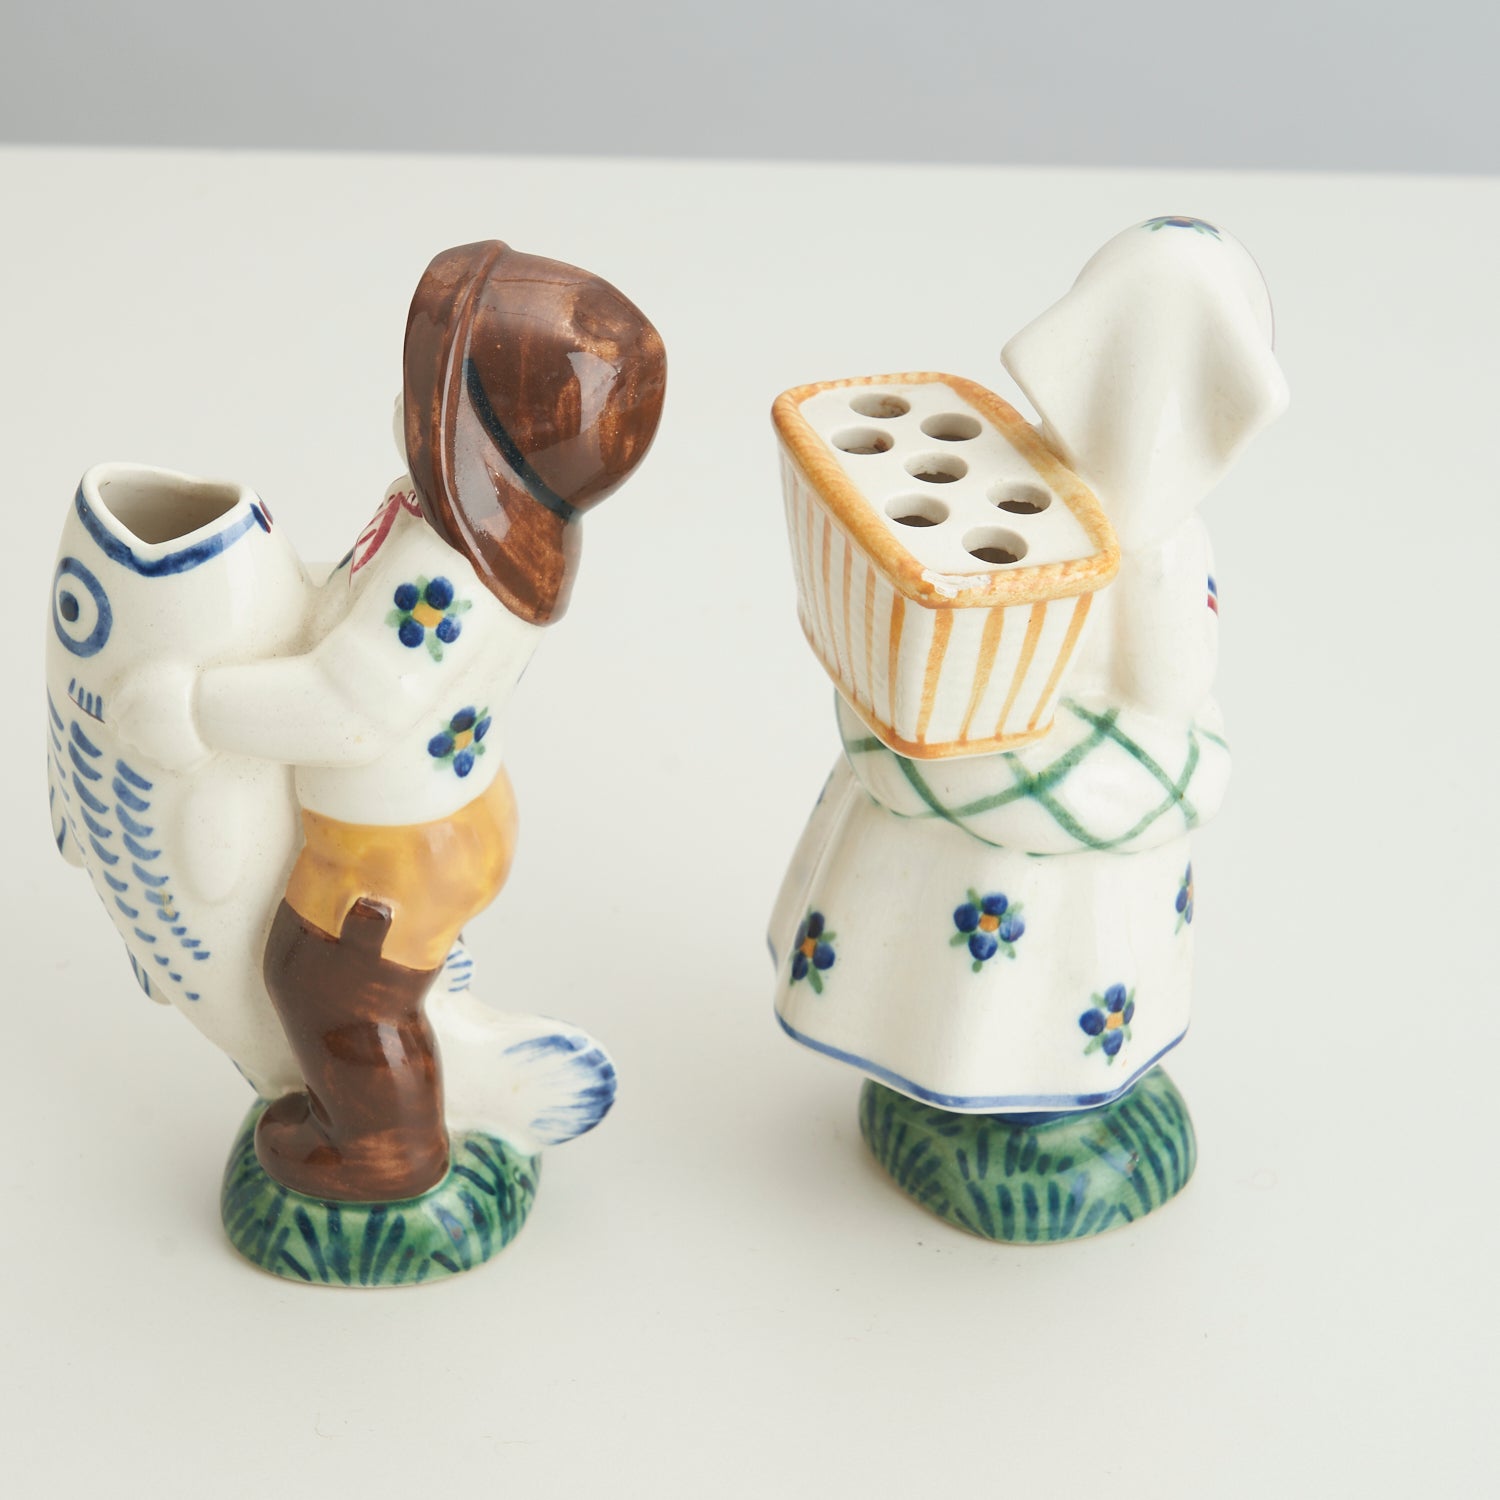 Pair of Ceramic Figurines by Royal Copenhagen